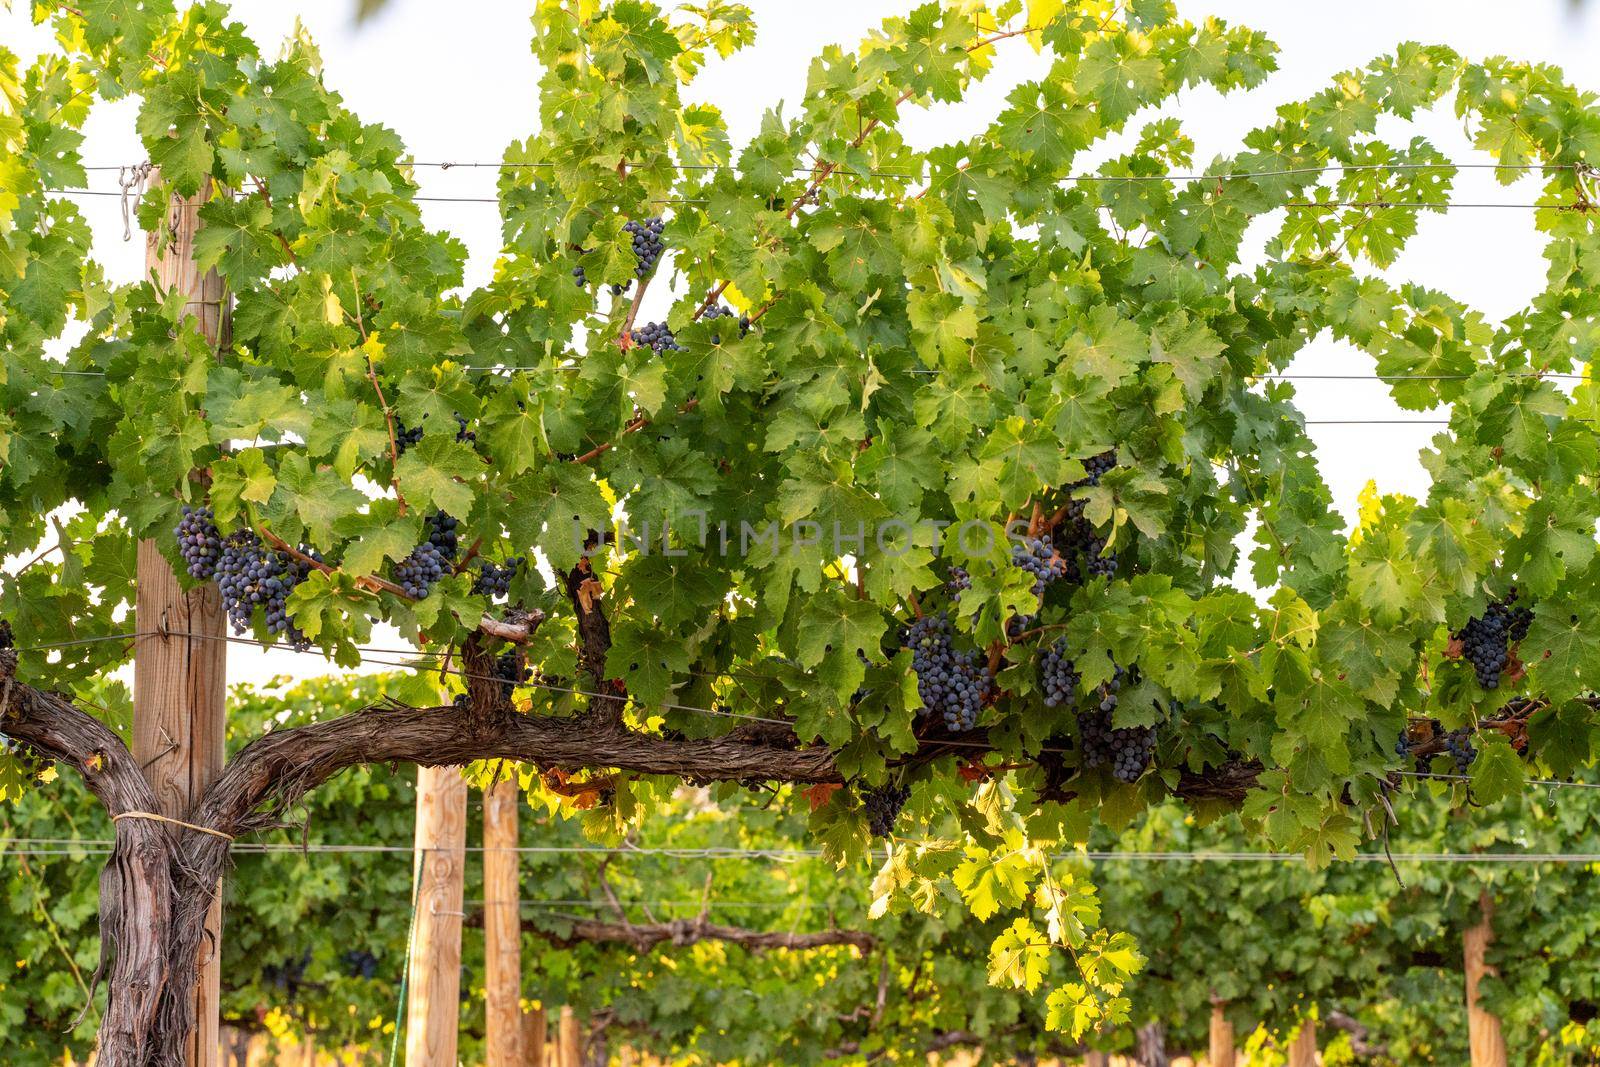 Row of Vineyard Grape Vineslate summer, blurred background, selective focus, filter by Matiunina